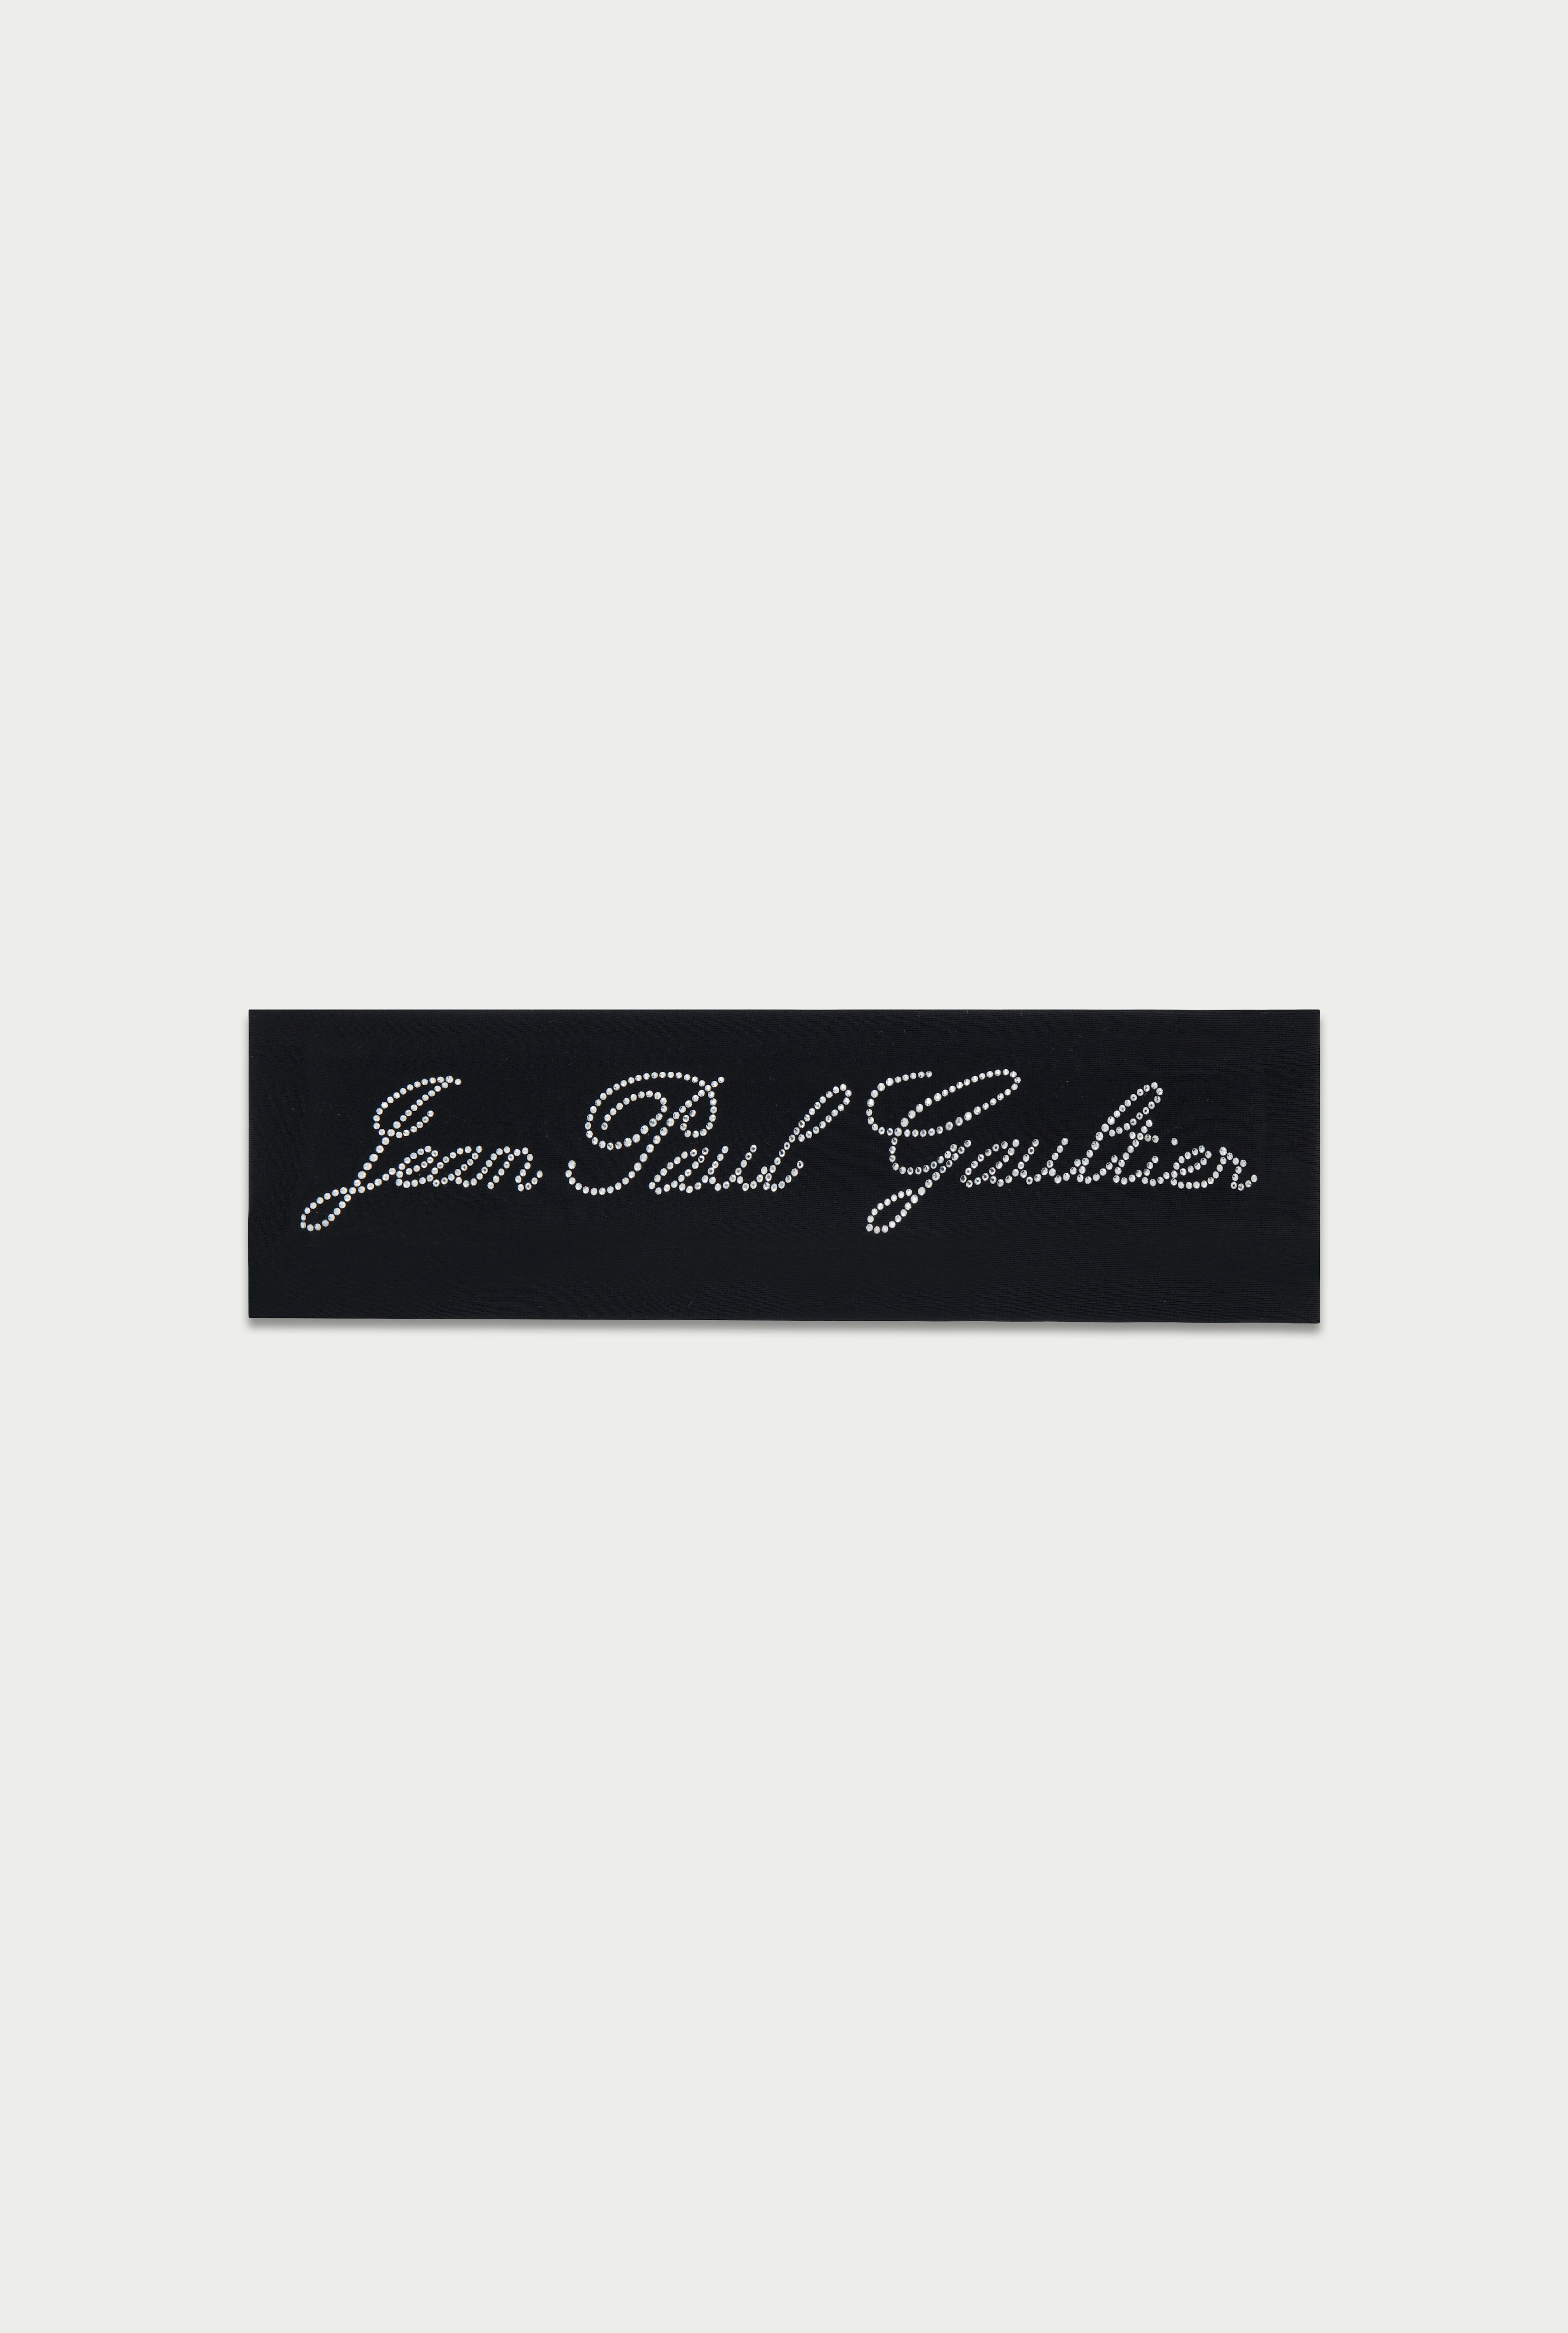 The Black Jean Paul Gaultier Headband